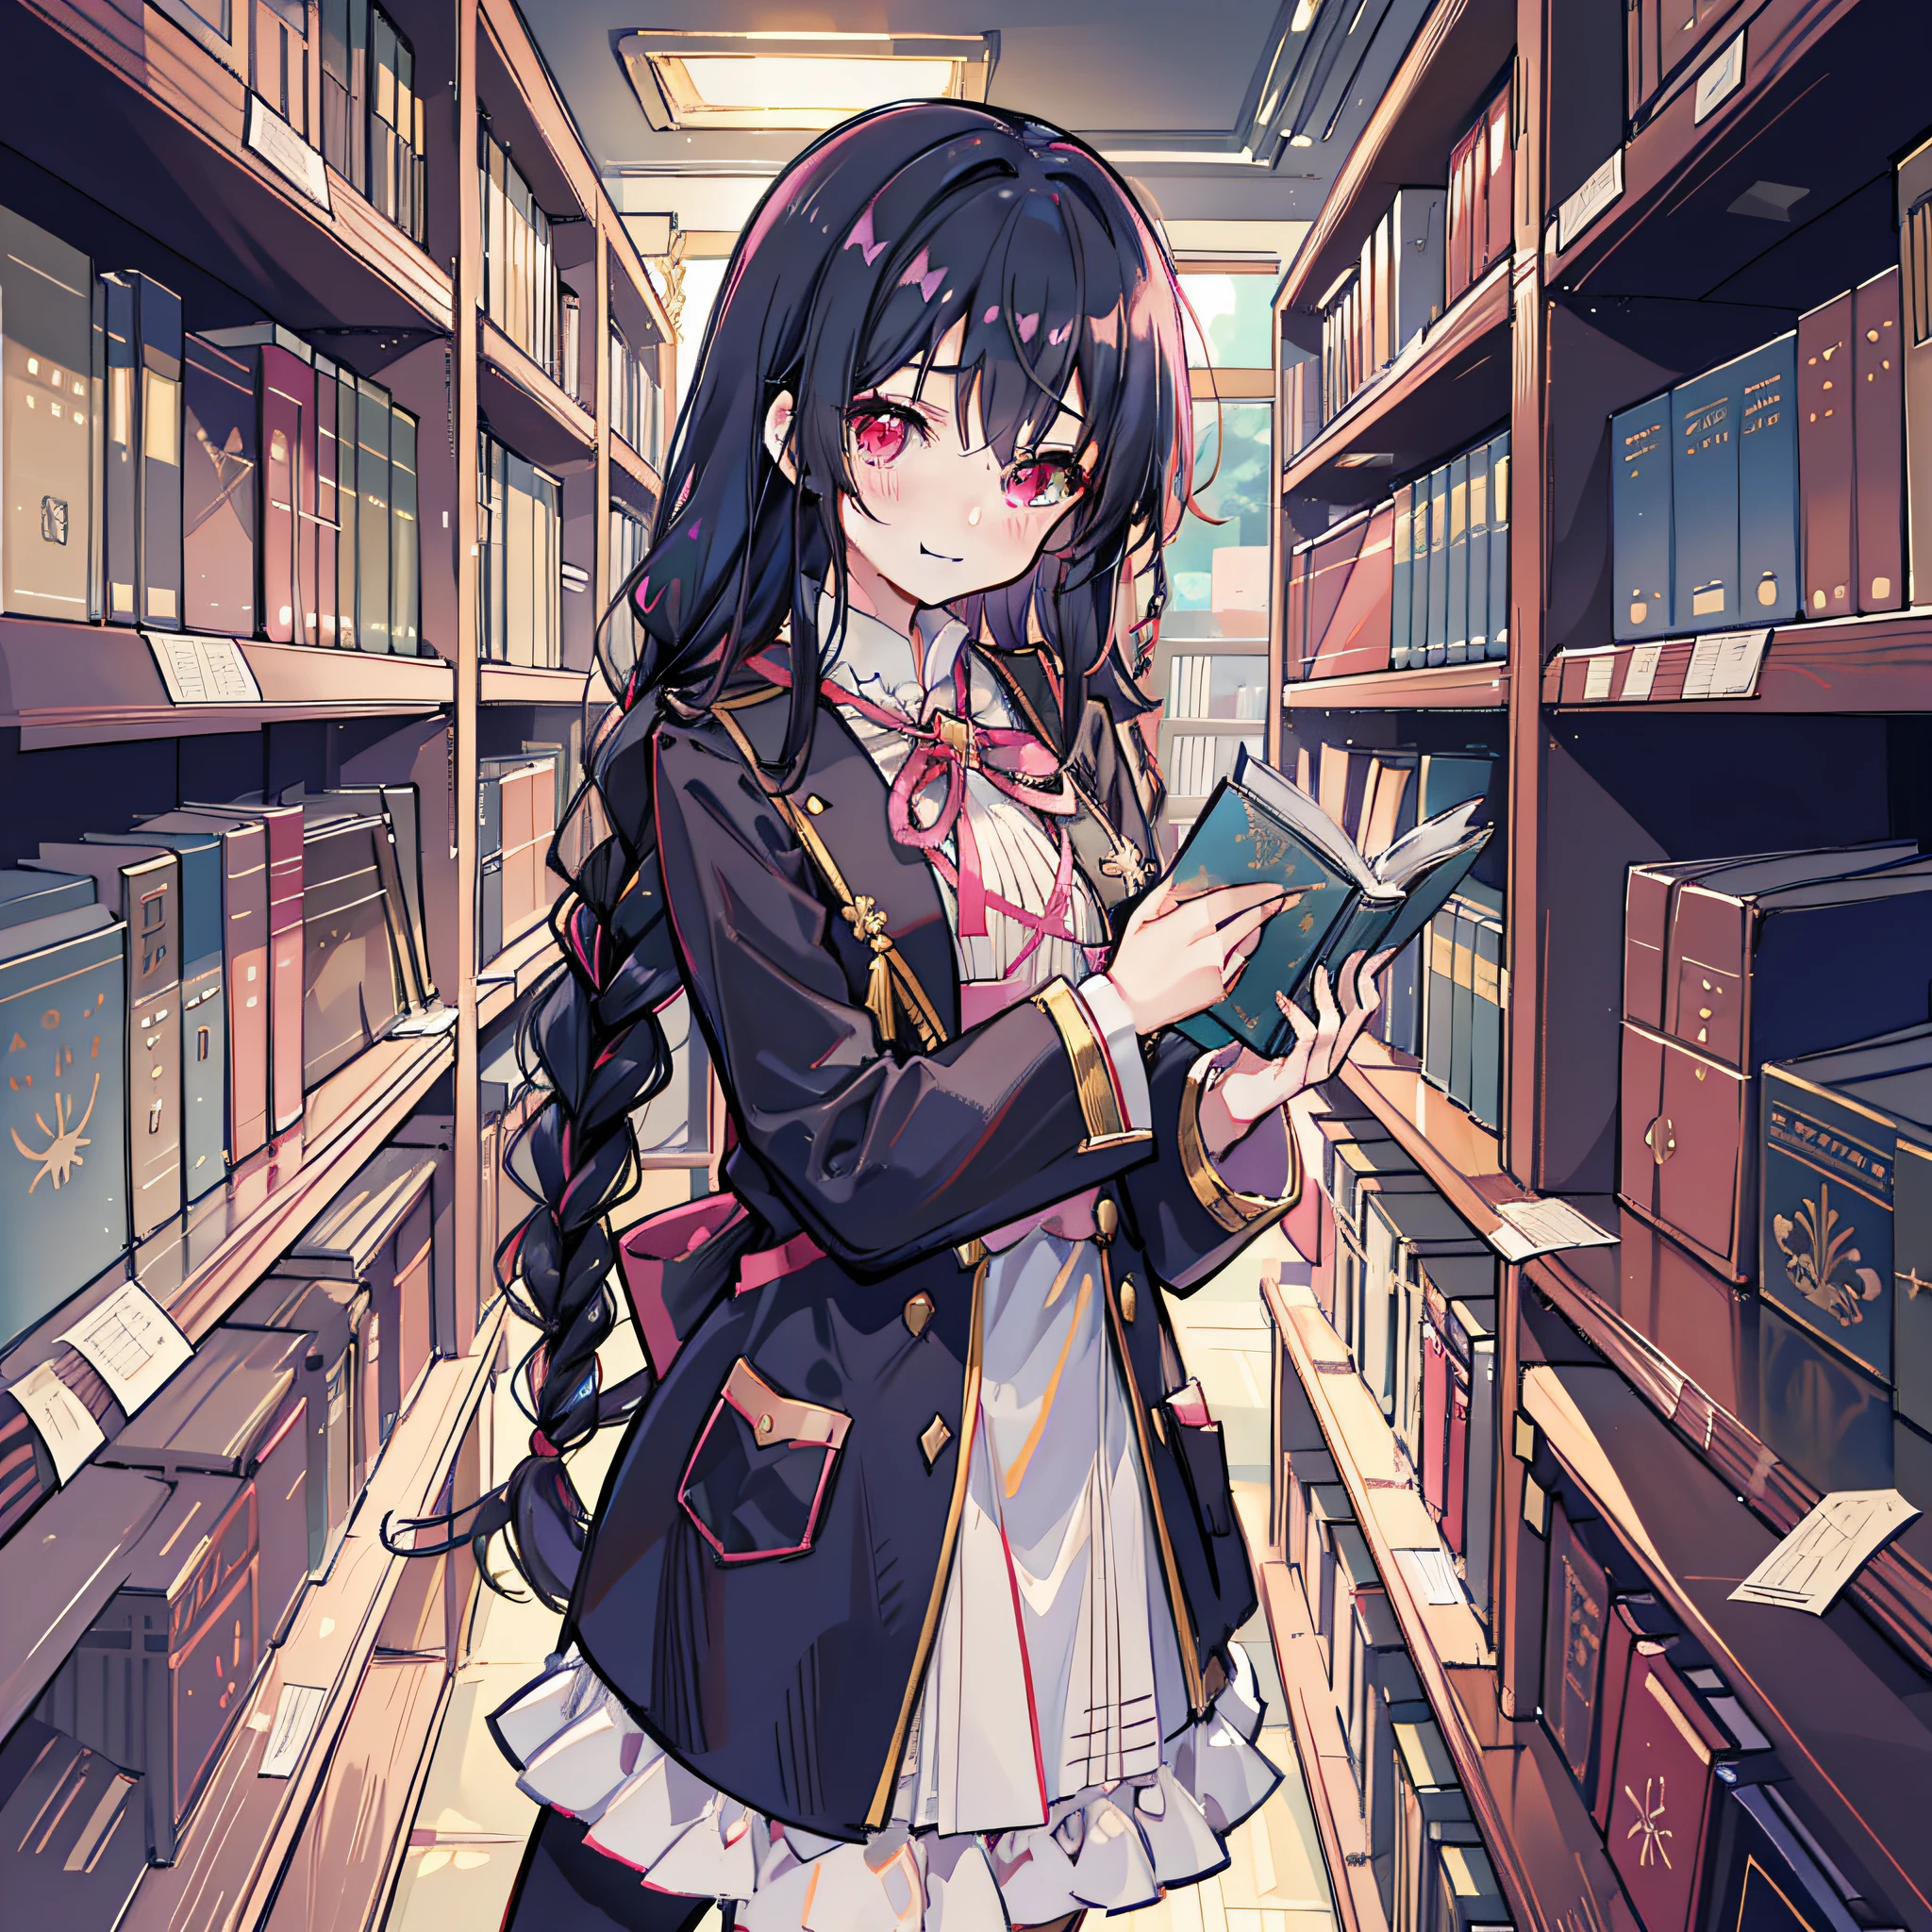 Moeki Kirizuka (private Grimoire Magic Academy), black hair, (2 braids), (big braid), straight hair, long bangs, red and pink eyes, smile, blush, shy, (blue uniform), black tights, holding a book, library